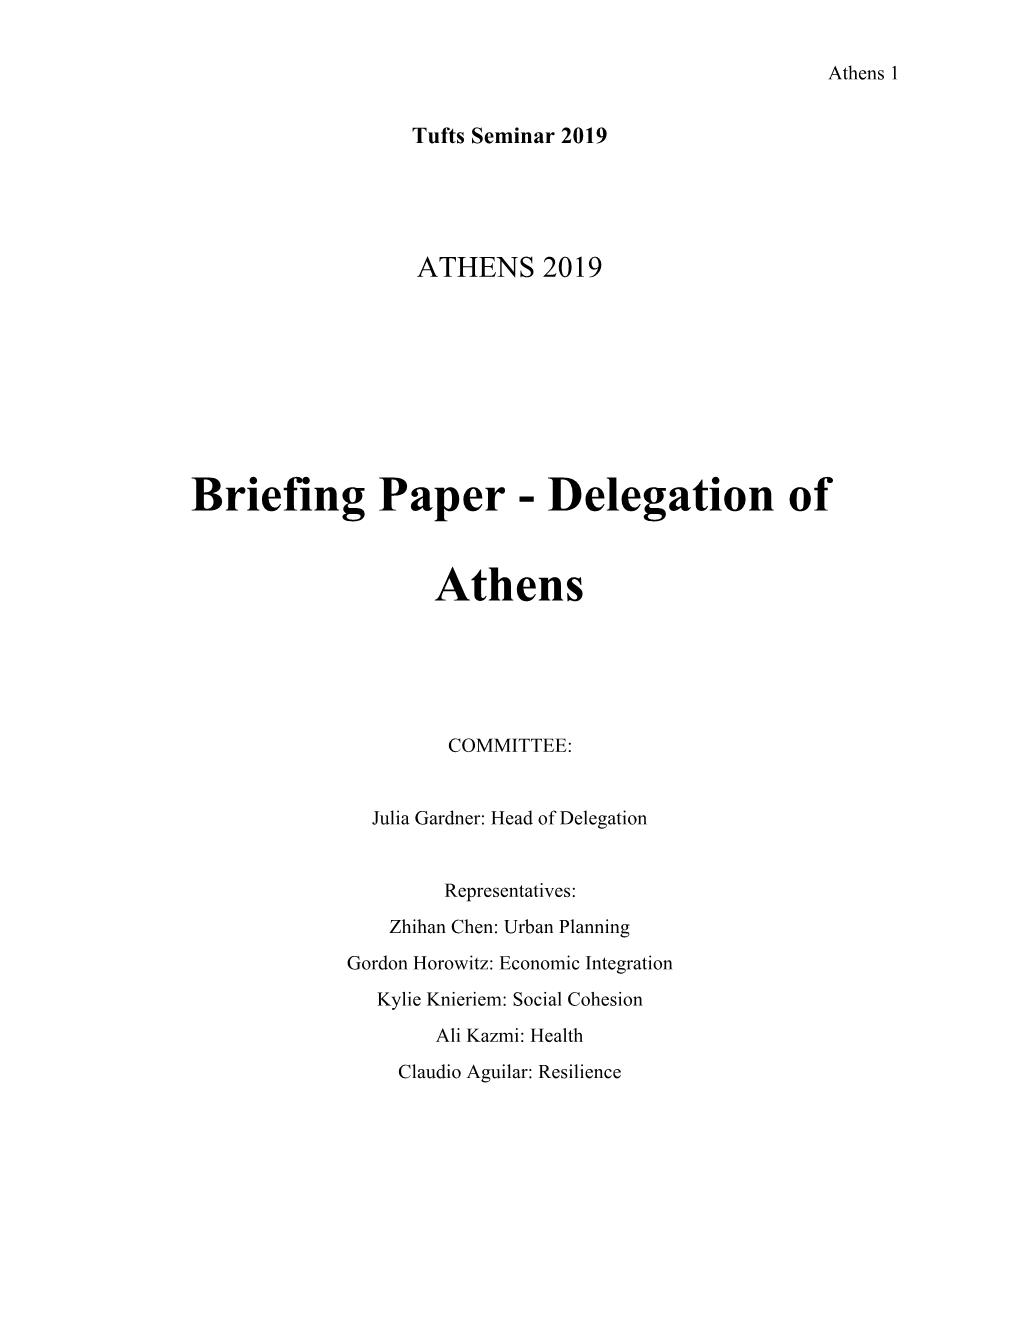 Briefing Paper - Delegation of Athens